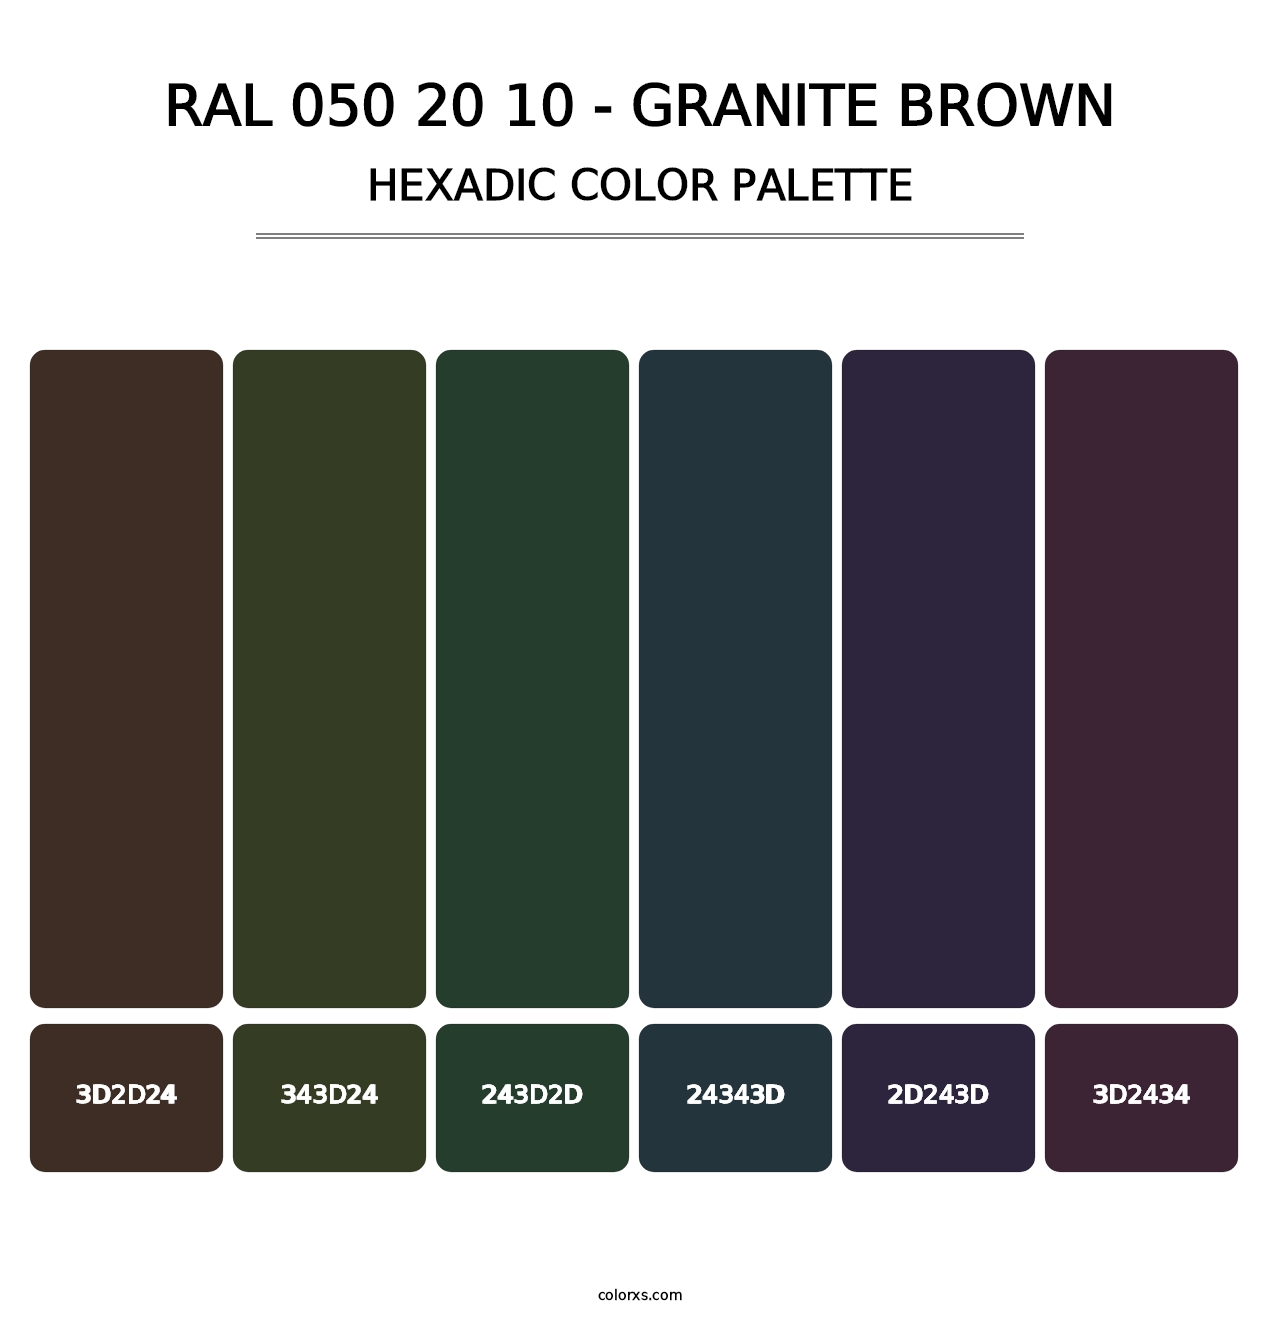 RAL 050 20 10 - Granite Brown - Hexadic Color Palette